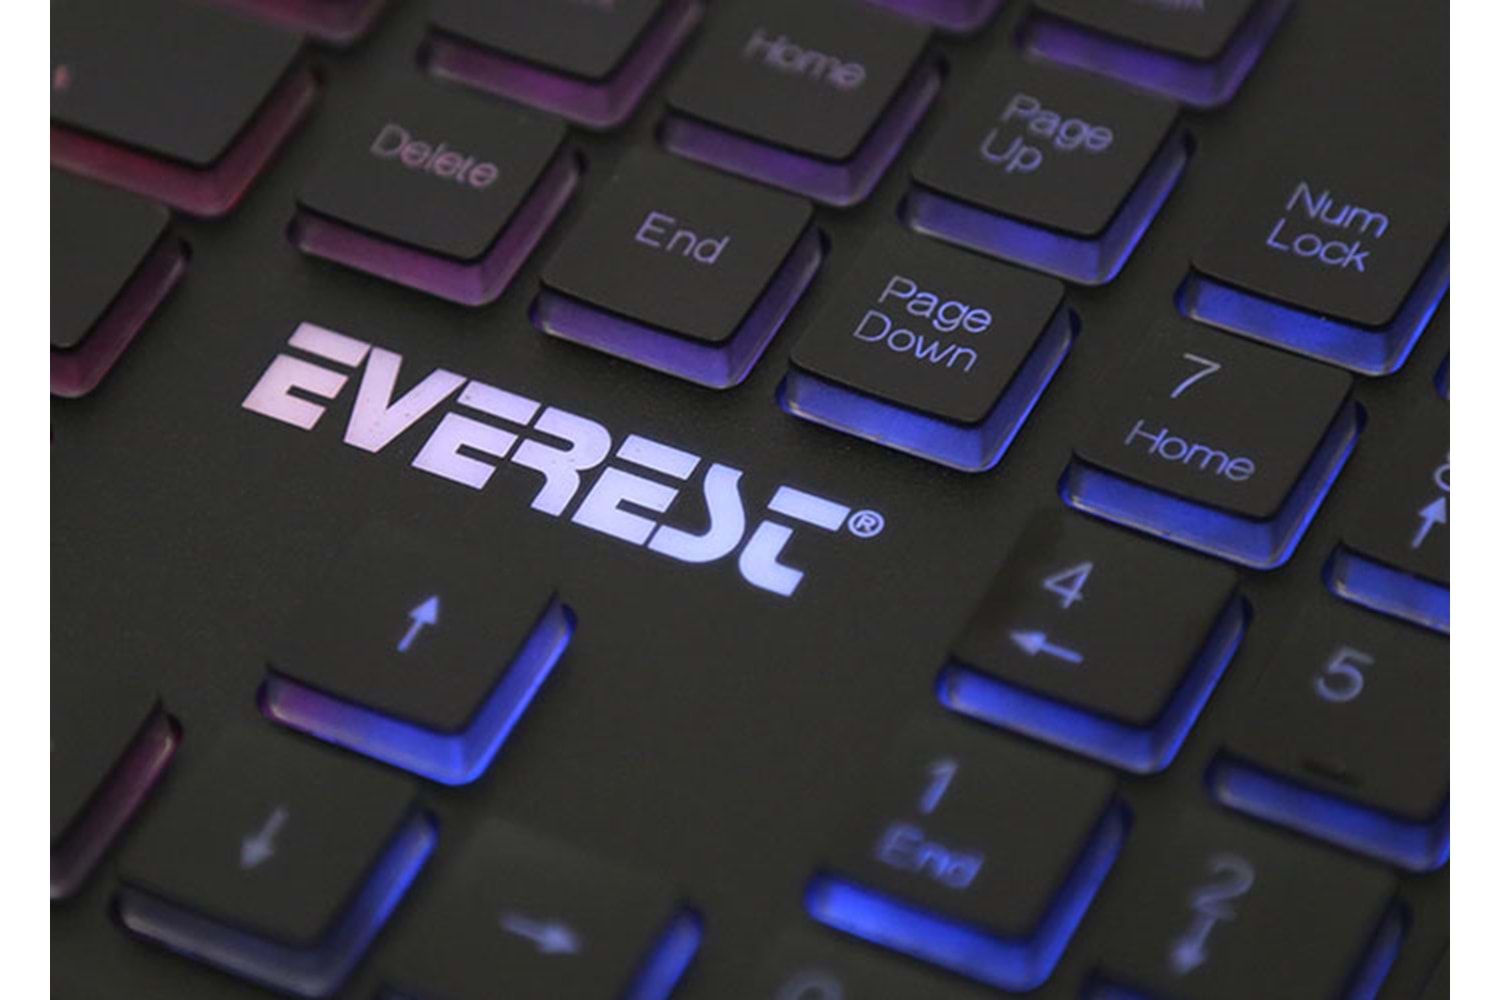 Everest KB-840 Siyah Renk Aydınlatmalı USB Q Standart Klavye